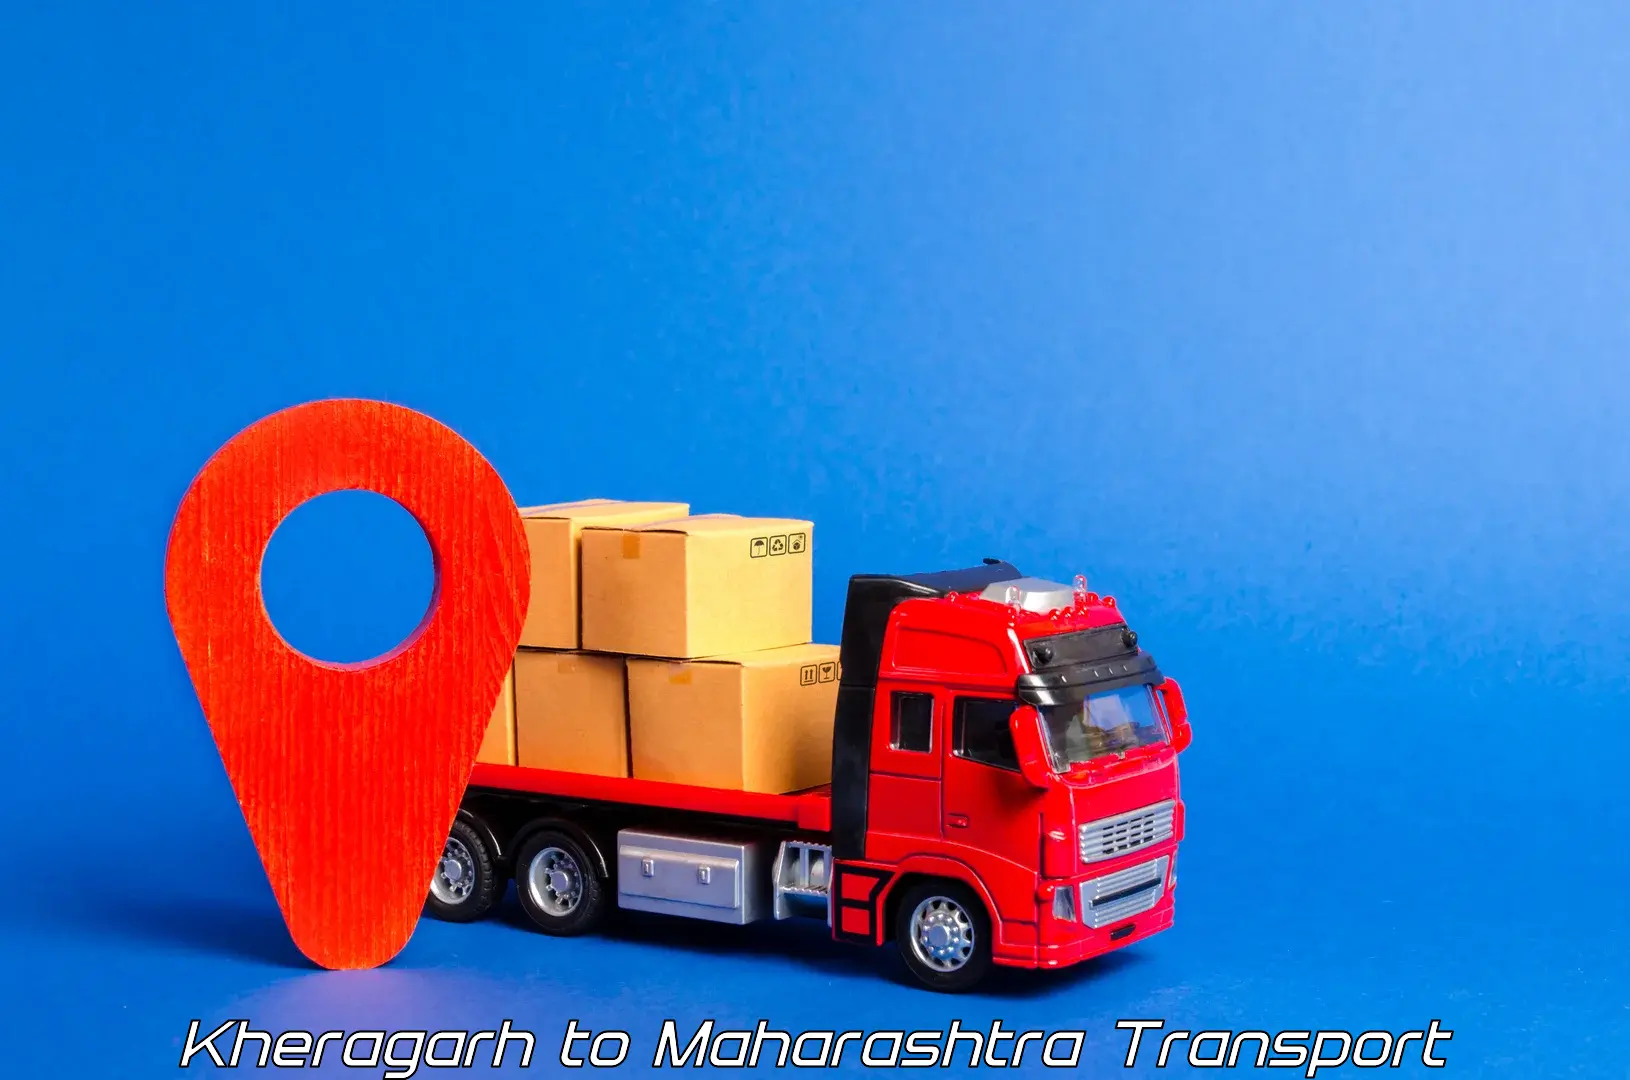 Truck transport companies in India Kheragarh to Gadhinglaj